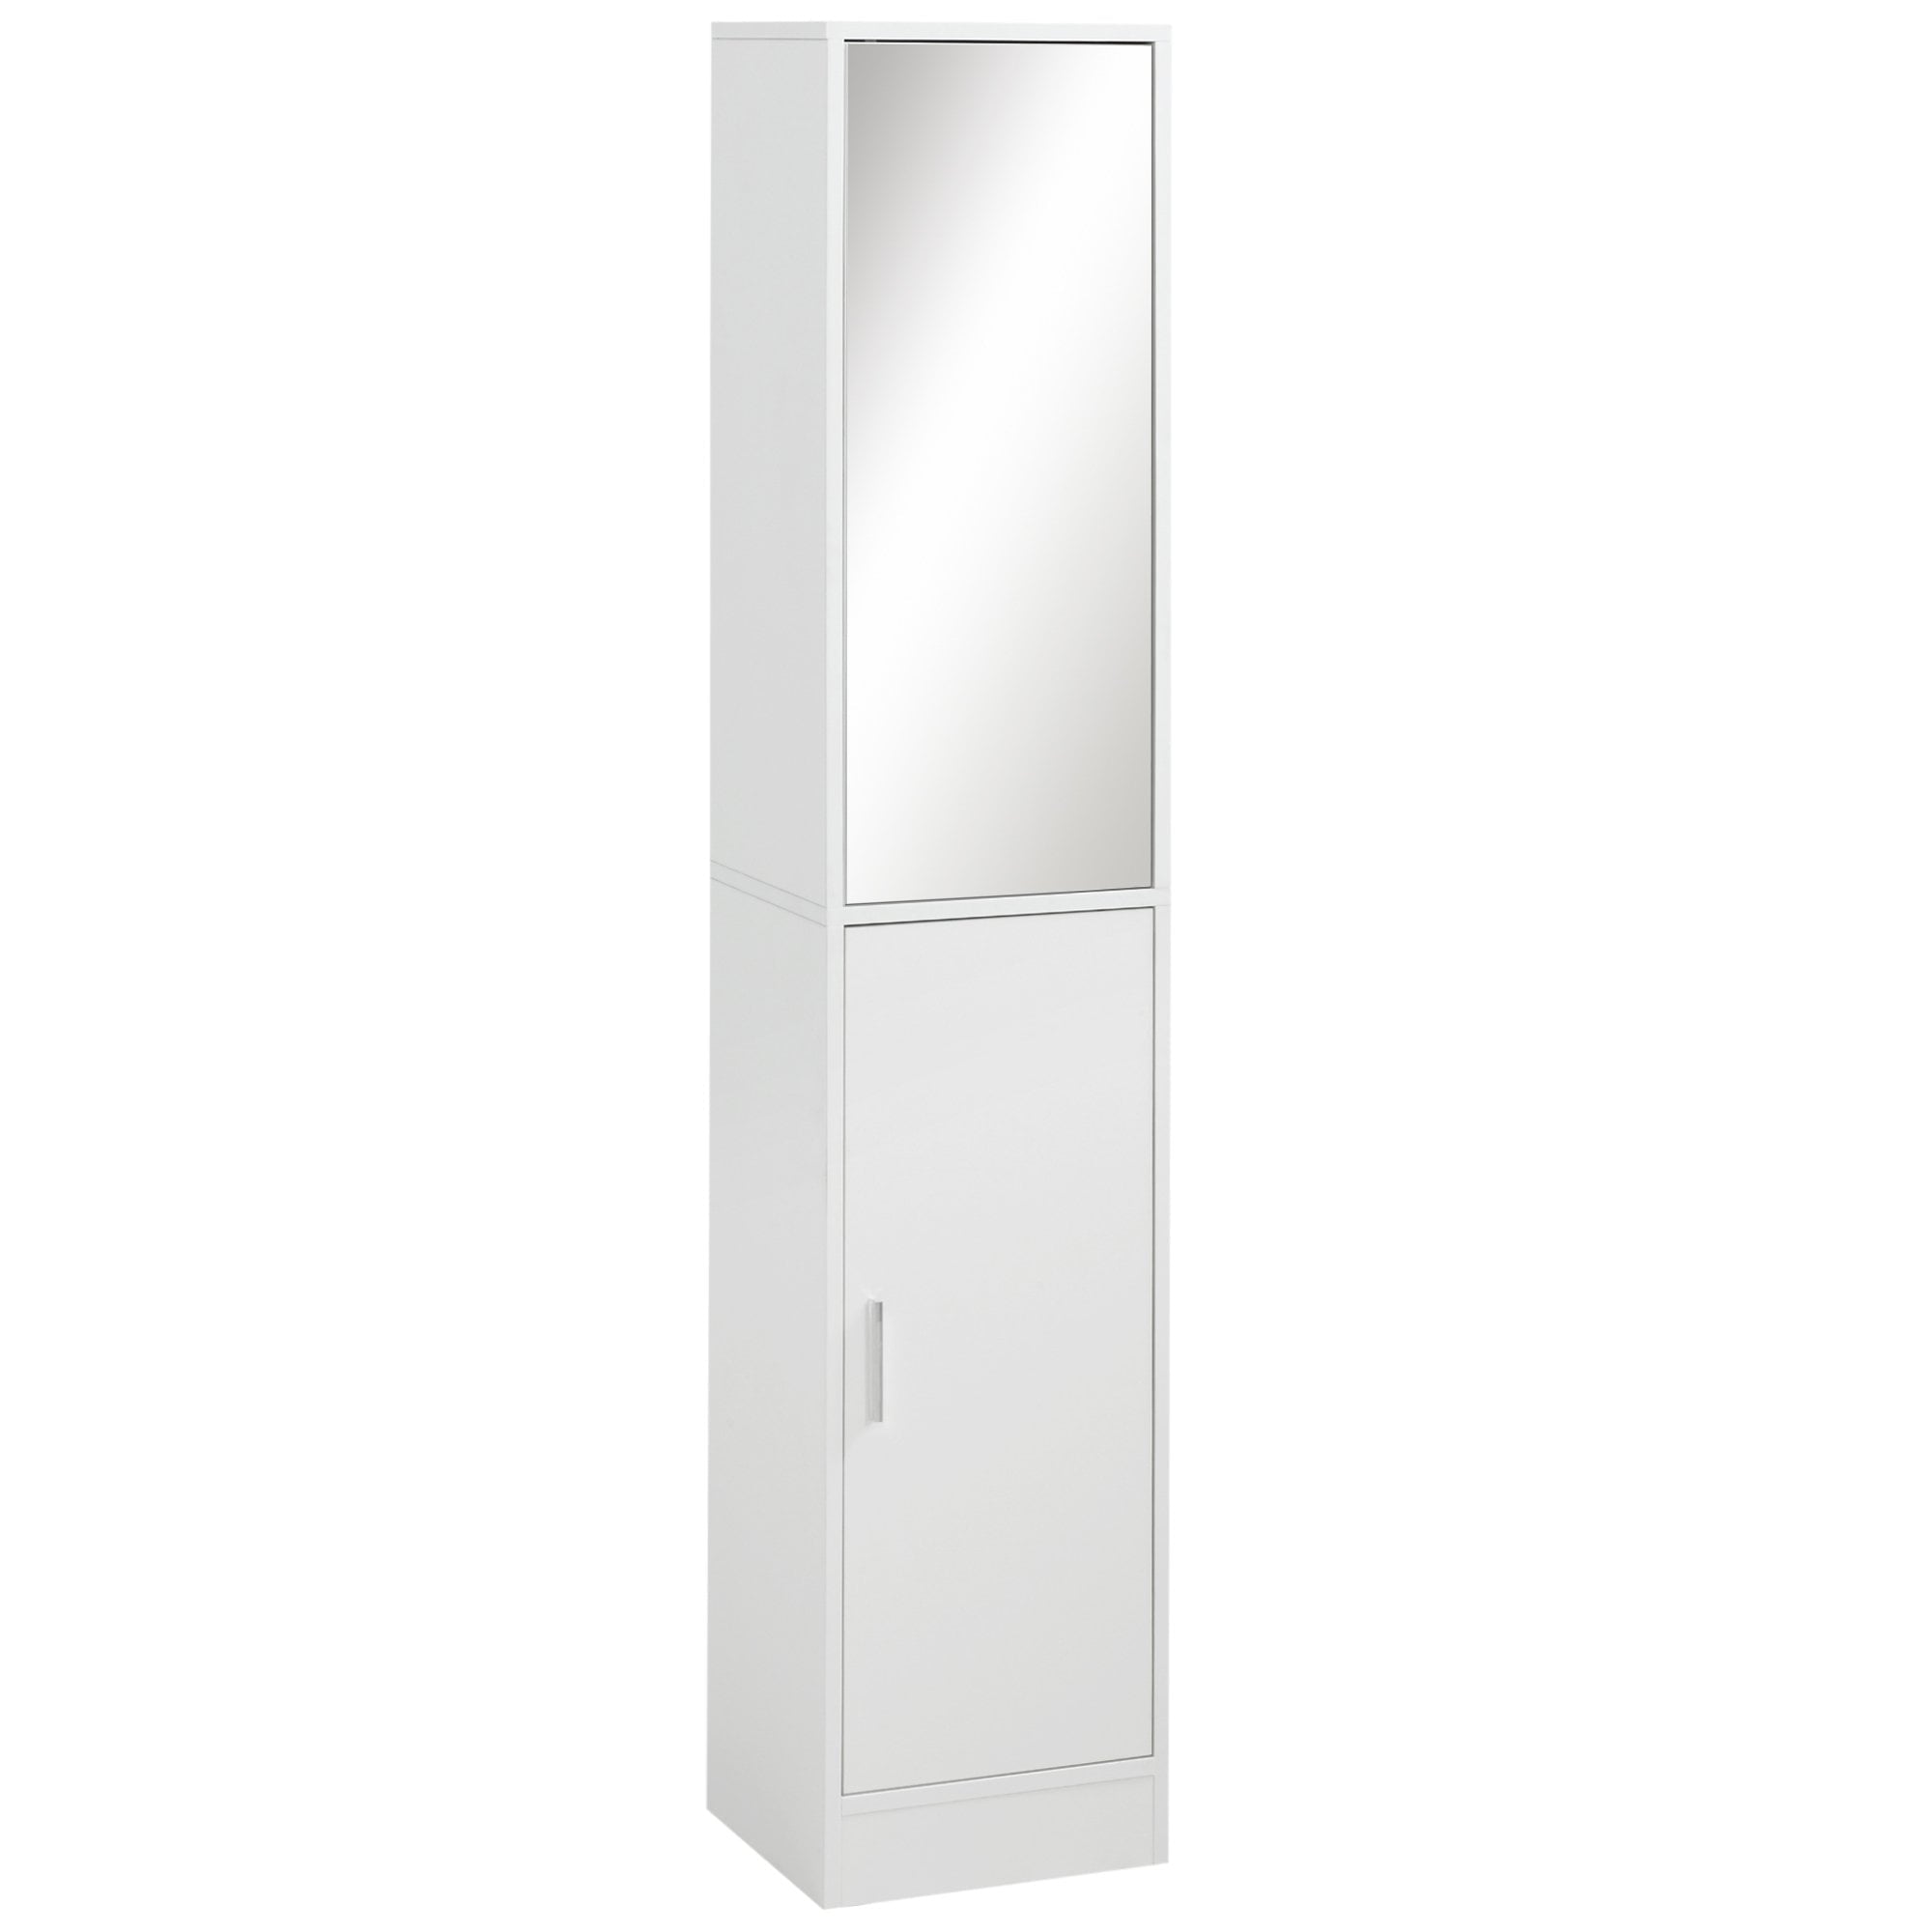 kleankin Tall Mirrored Bathroom Cabinet - Bathroom Storage Cupboard - Floor Standing Tallboy Unit with Adjustable Shelf - White w/Adjustable Shelf - H